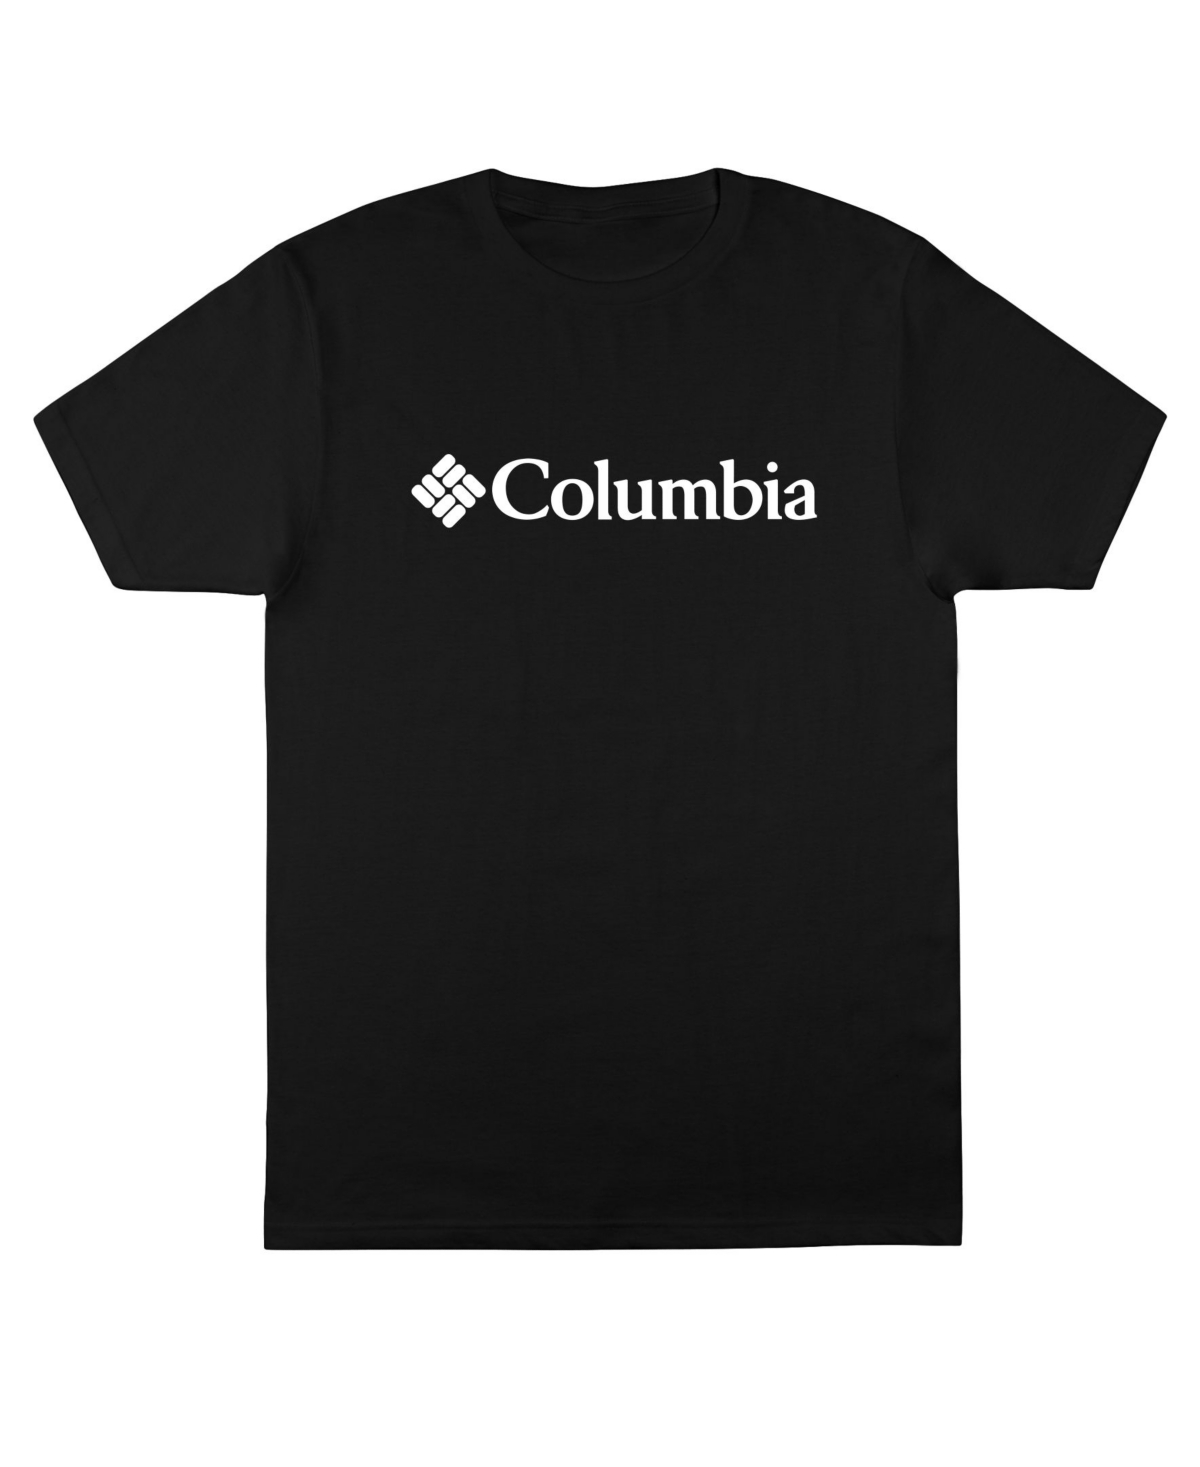 Columbia Sportswear Men's Fundamentals Long Sleeve T-shirt